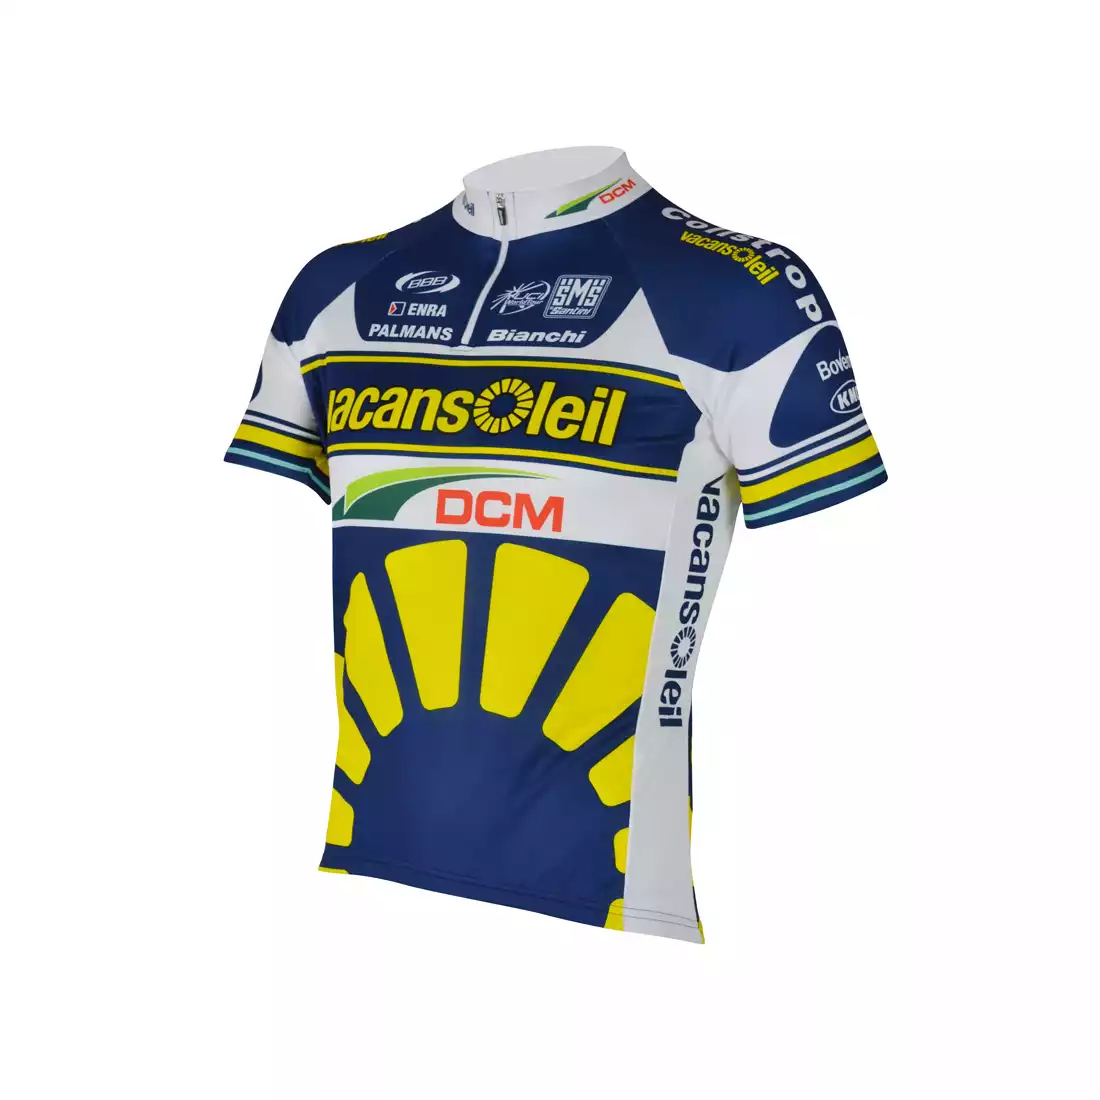 SANTINI - team VACANSOLEIL 2013 - męska koszulka rowerowa